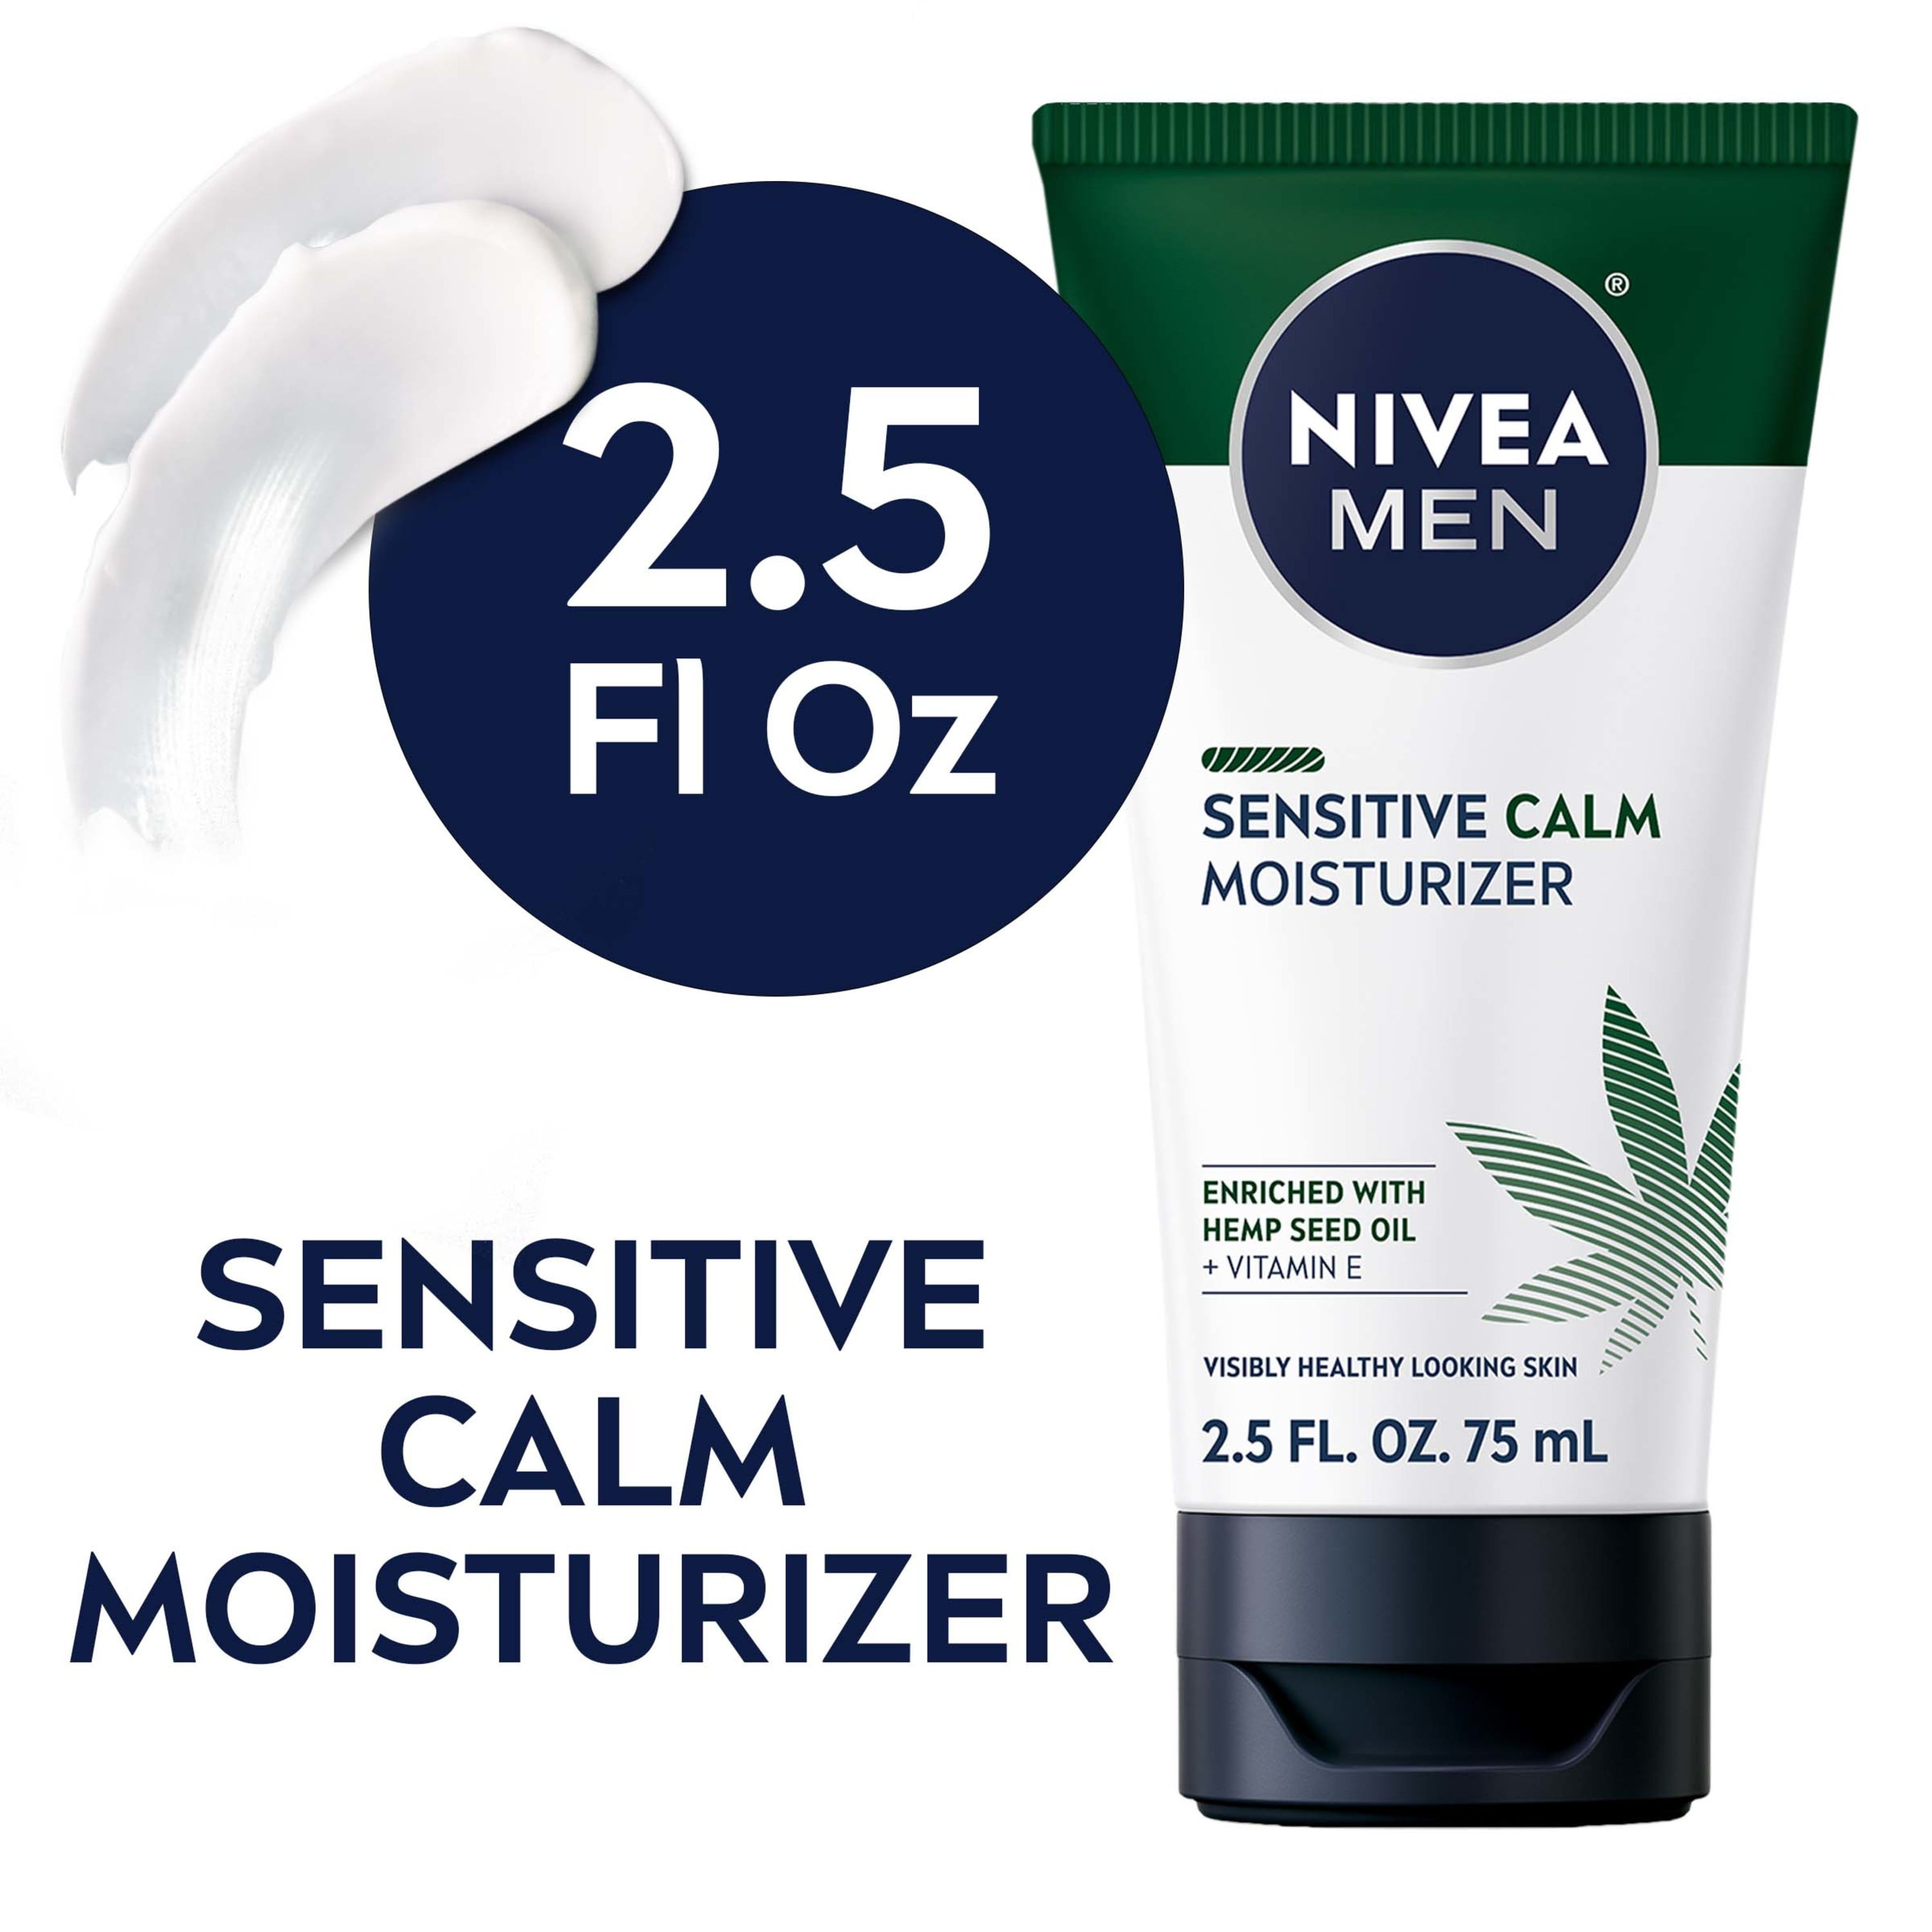 NIVEA MEN Sensitive Calm Moisturizer, 2.5 Fl Oz Tube